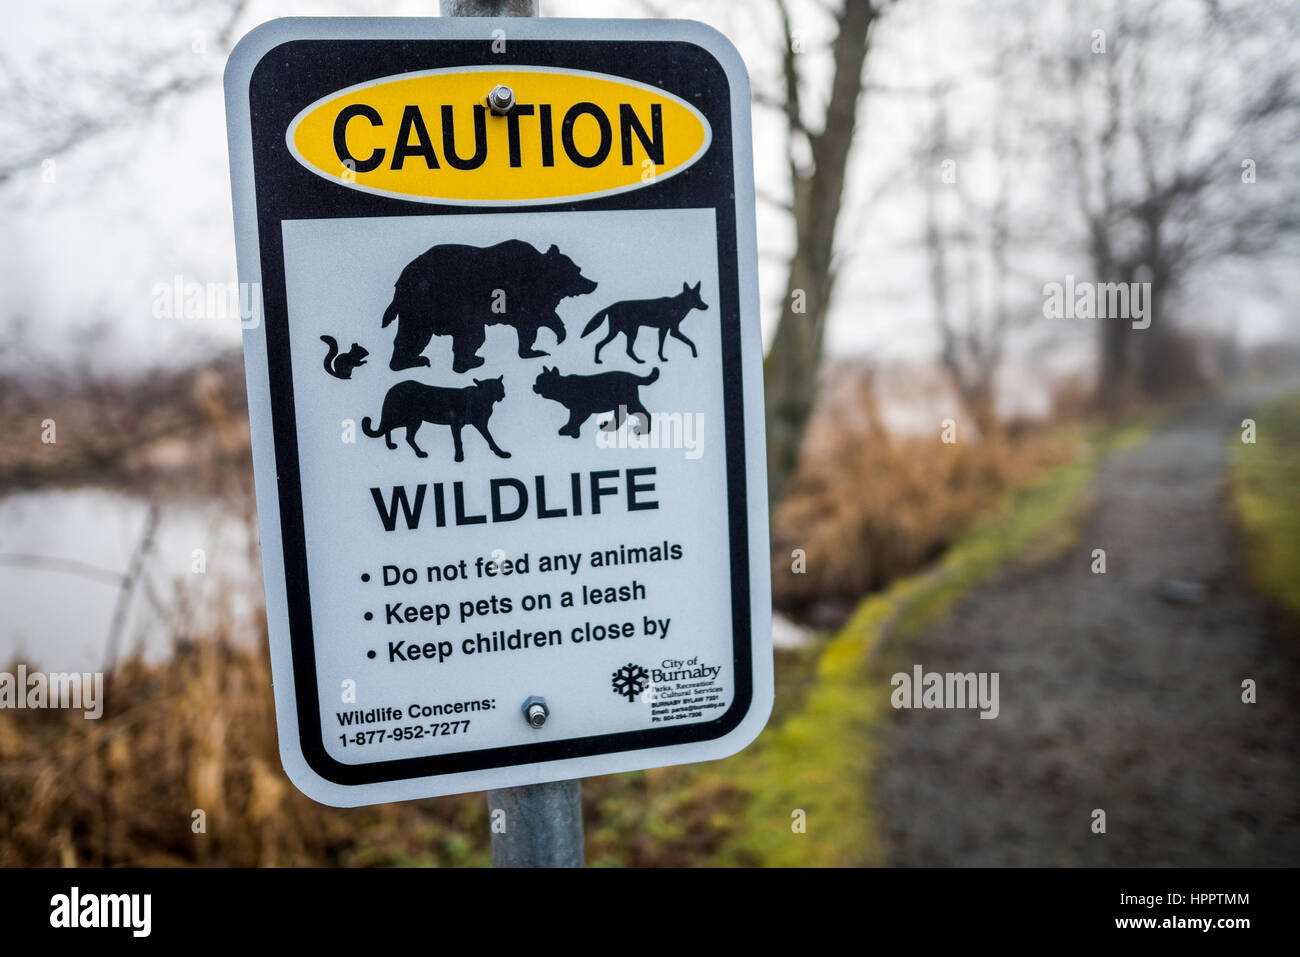 https://c8.alamy.com/comp/HPPTMM/caution-wildlife-sign-burnaby-british-columbia-canada-HPPTMM.jpg